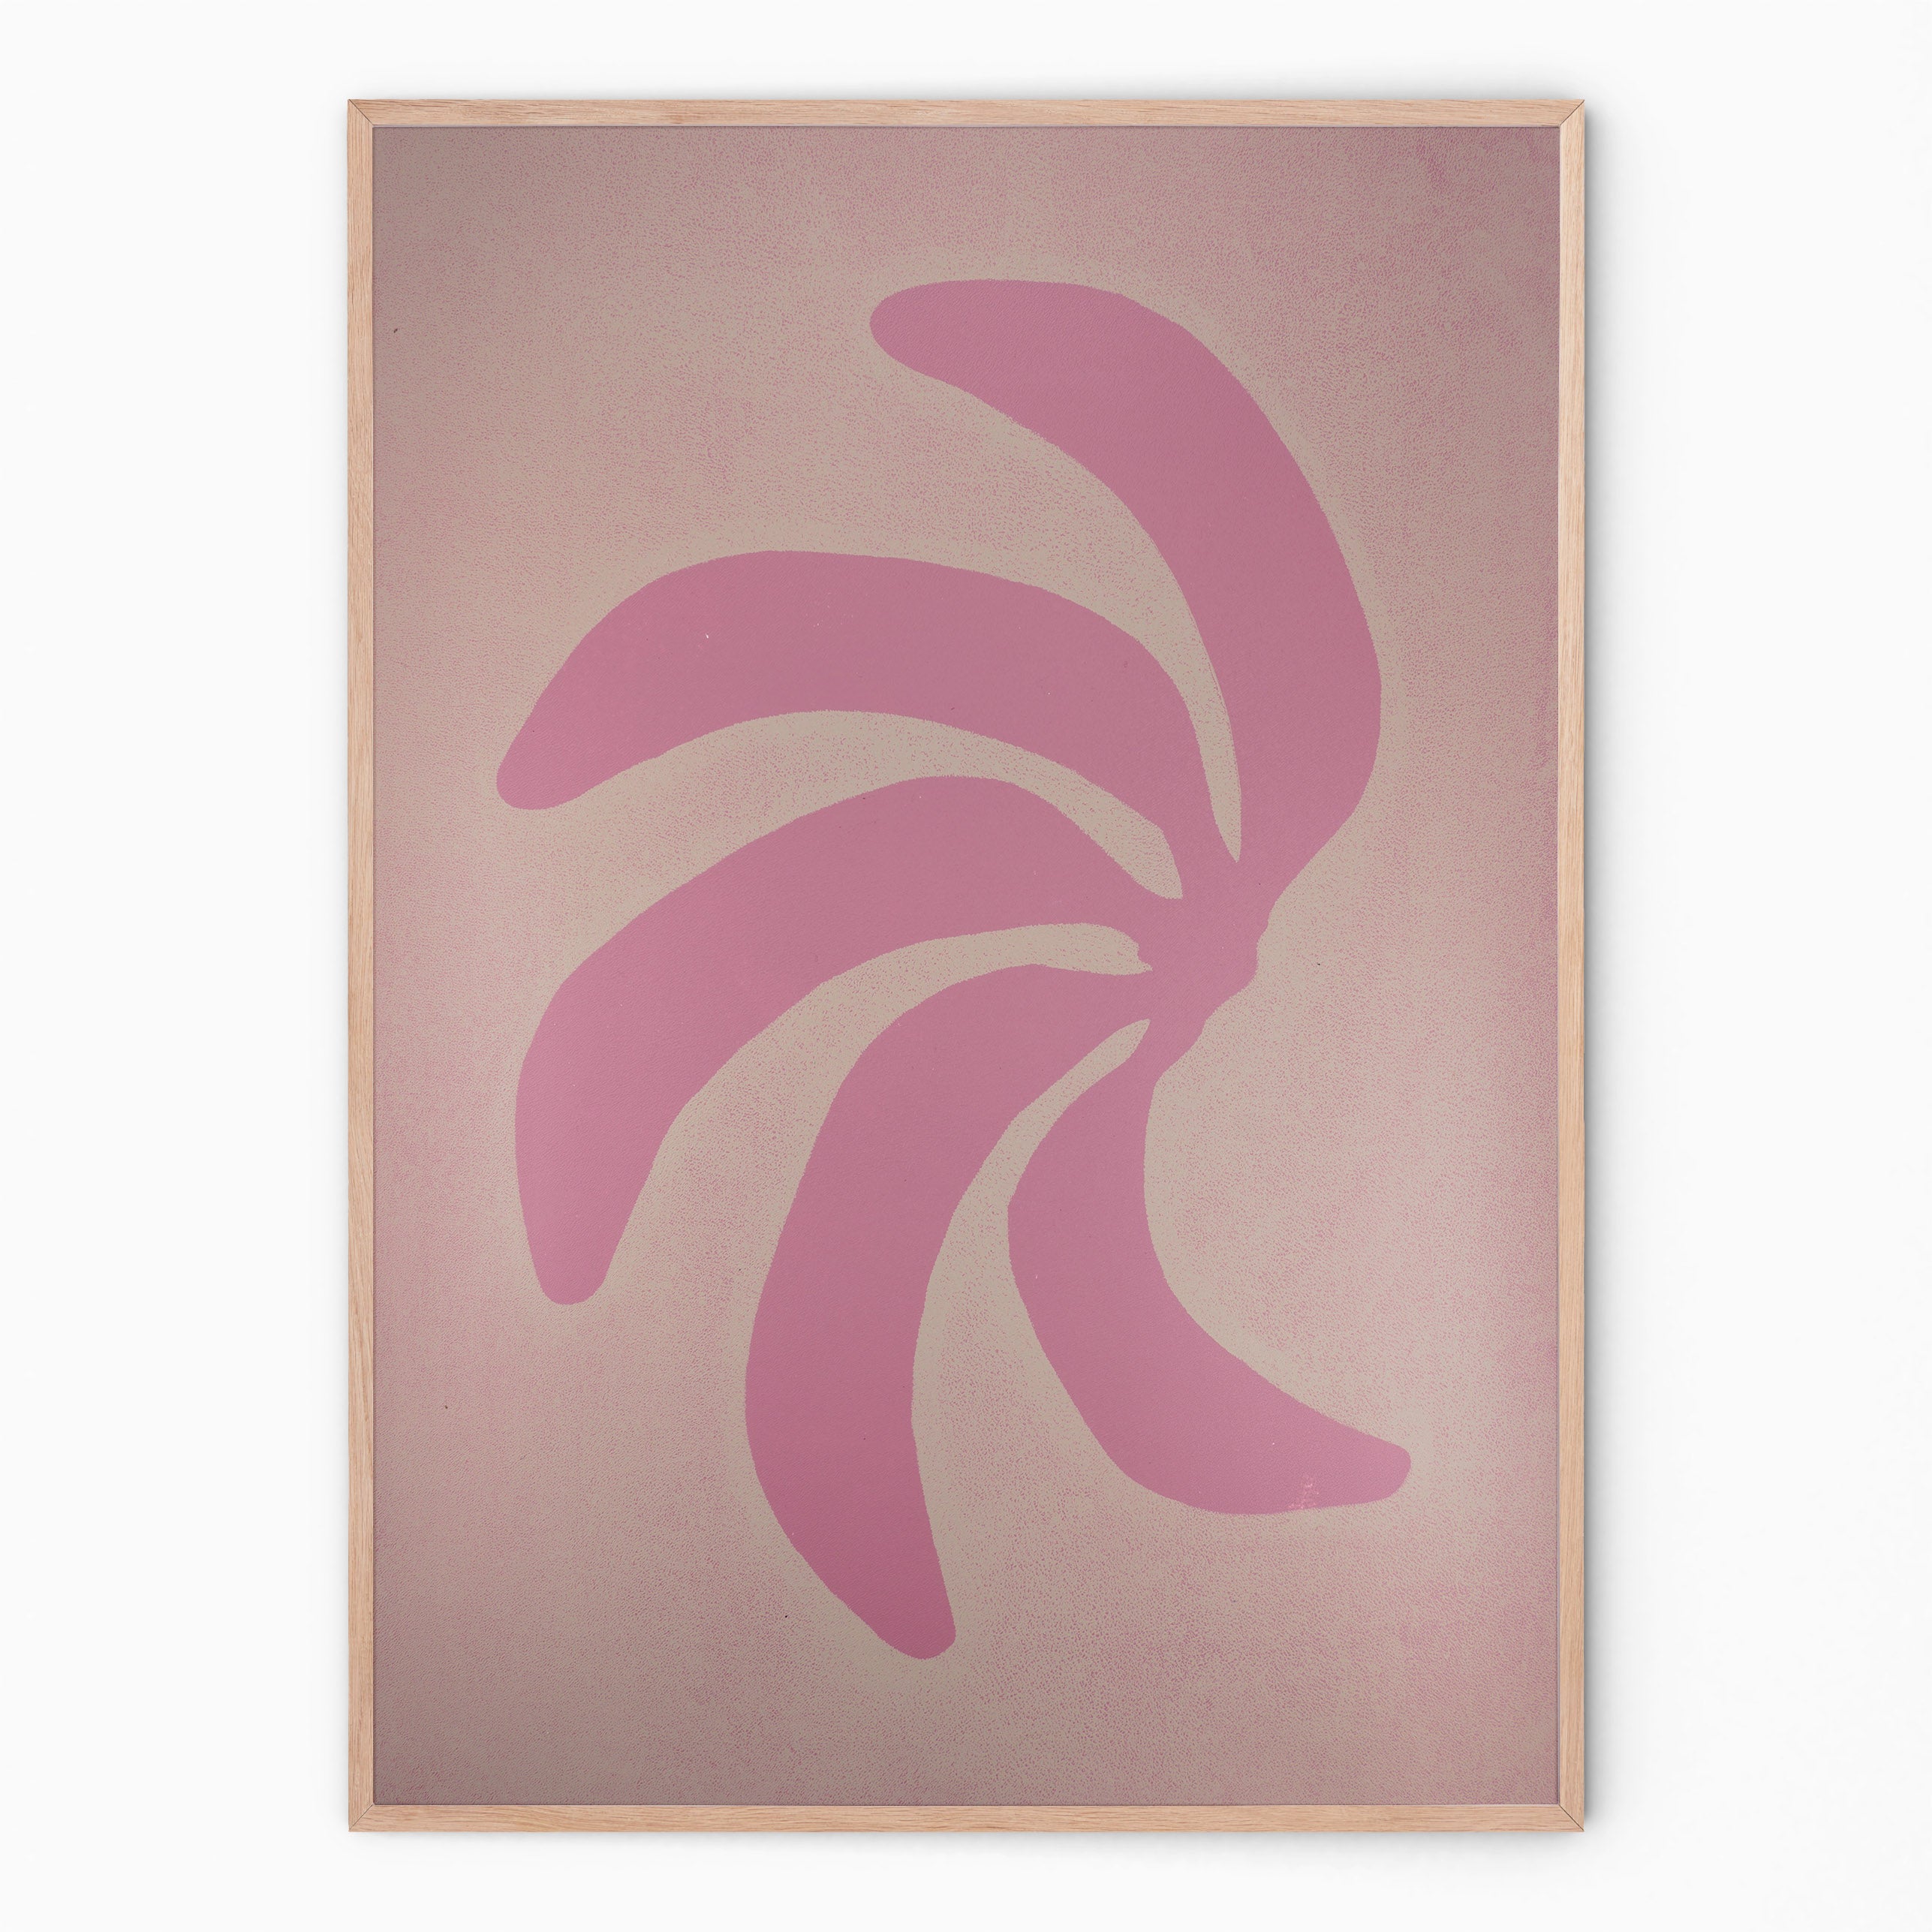 Handmade wall art with soft pink bananas I Handmade poster Enkel Art Studio